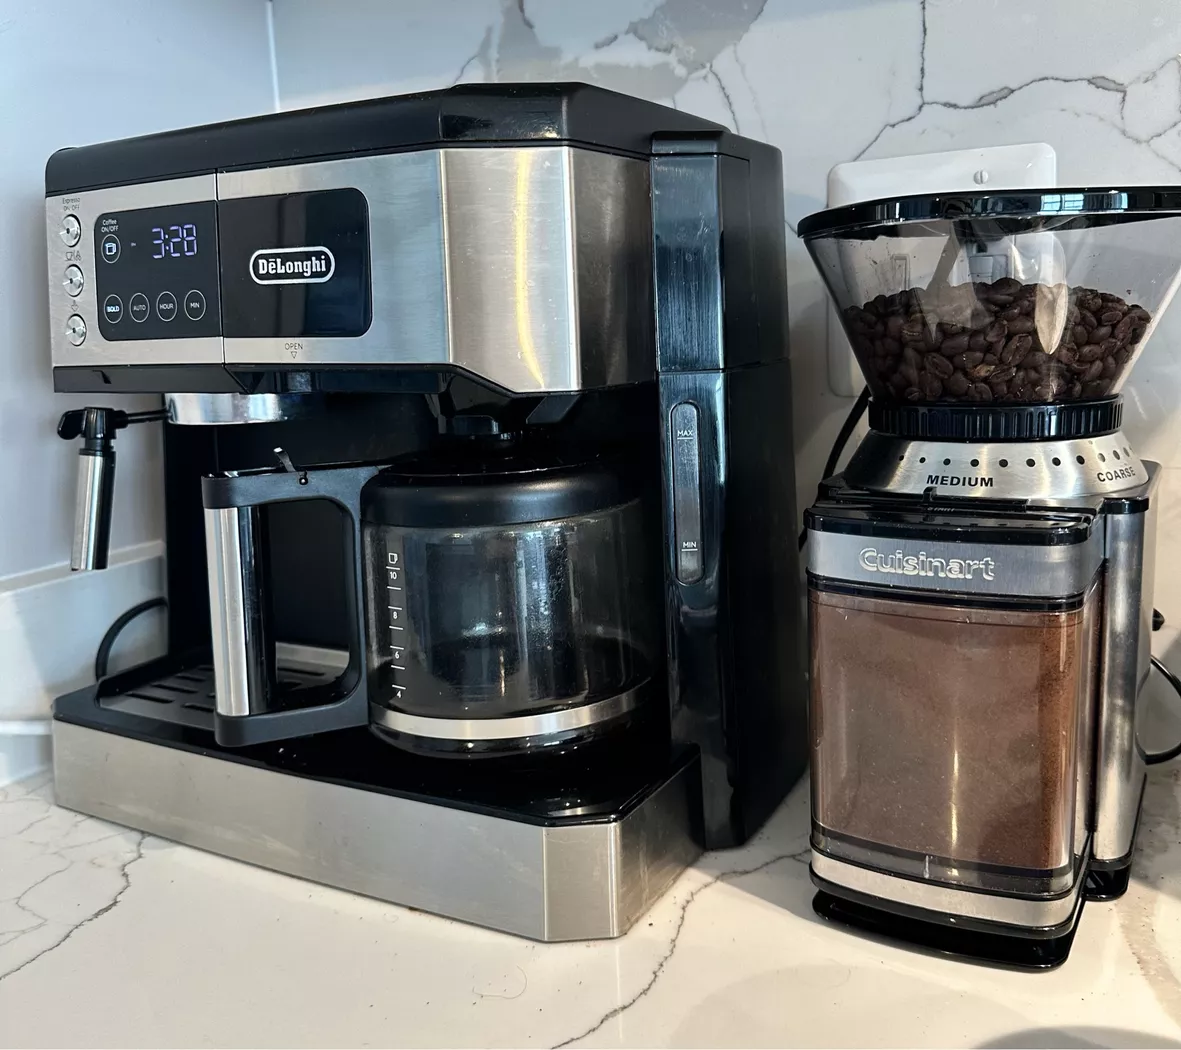  De'Longhi All-in-One Combination Coffee Maker